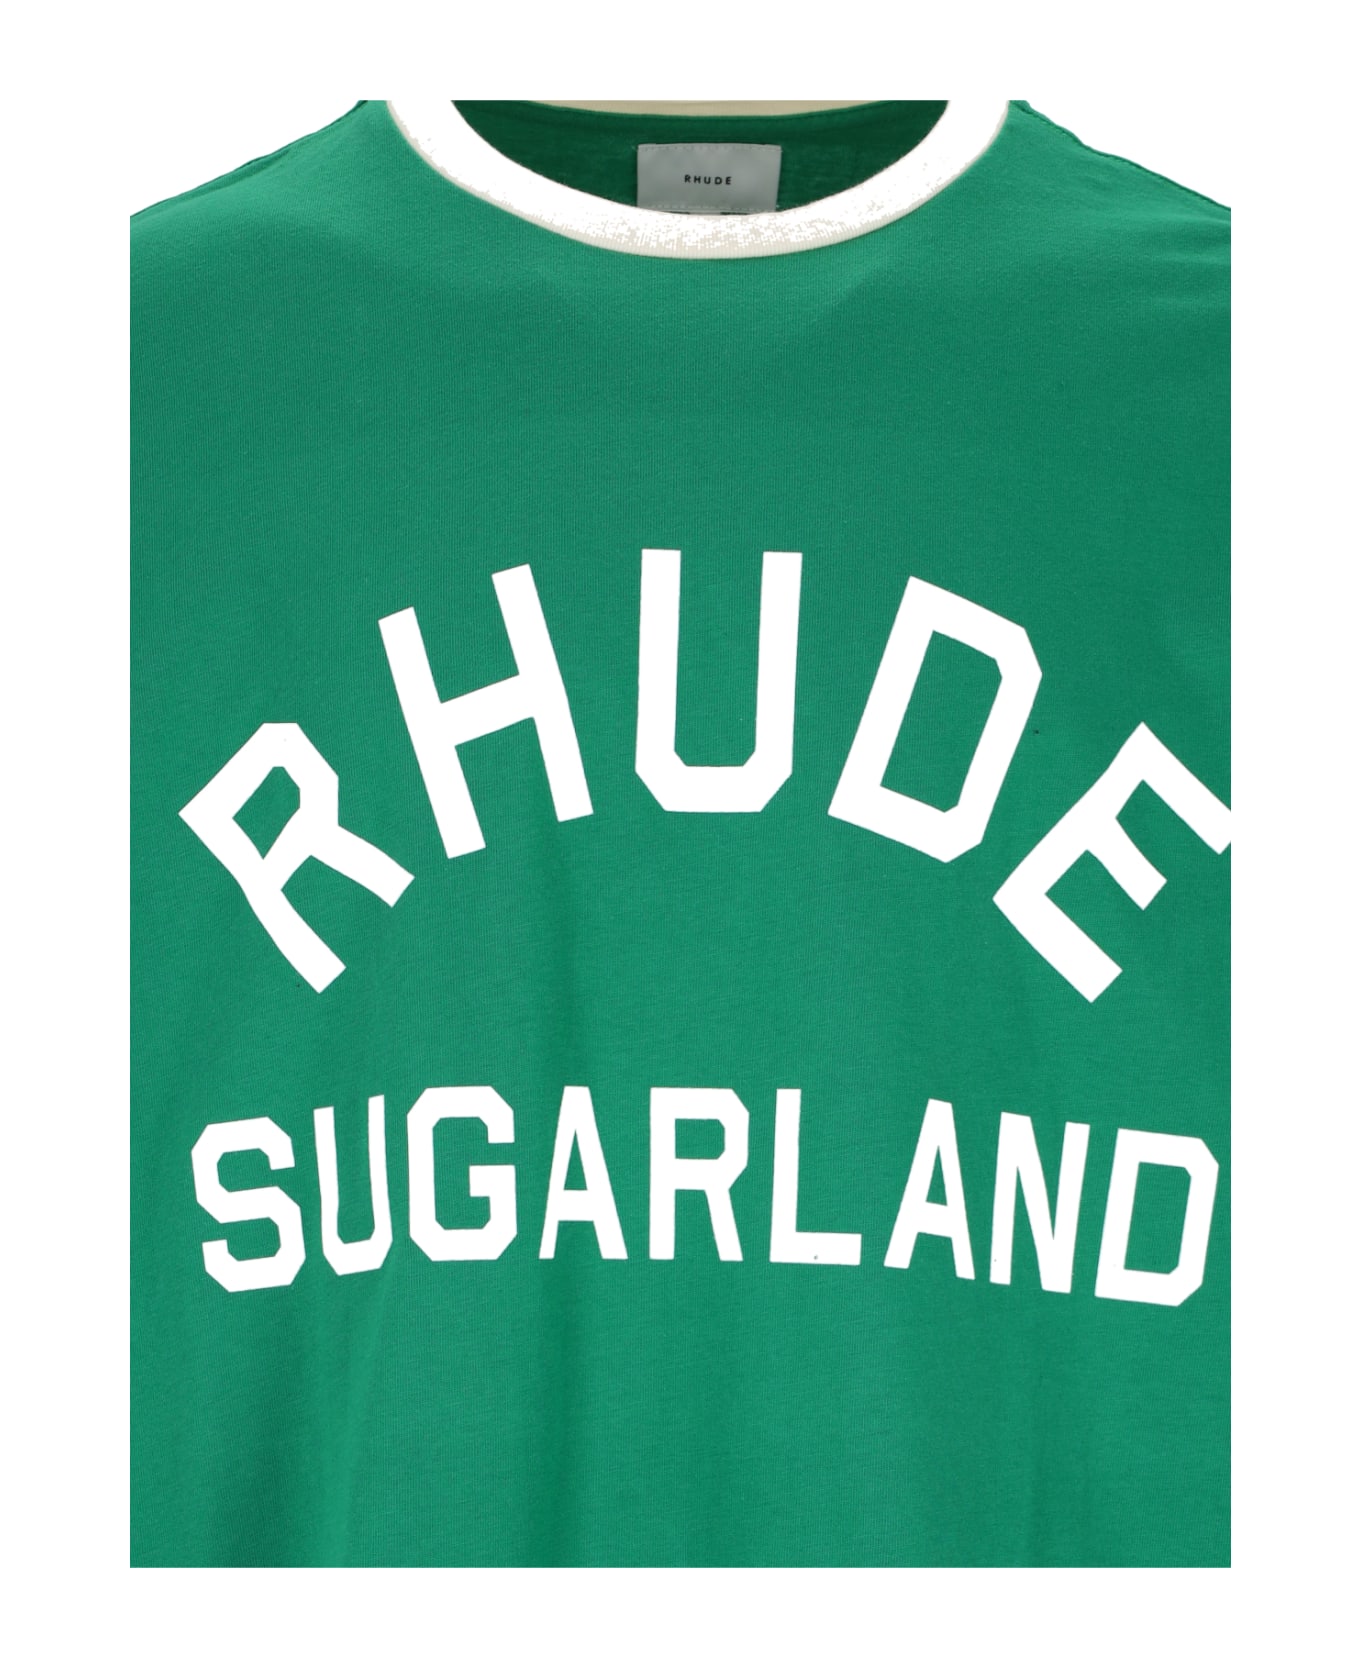 Rhude Logo T-shirt - Green